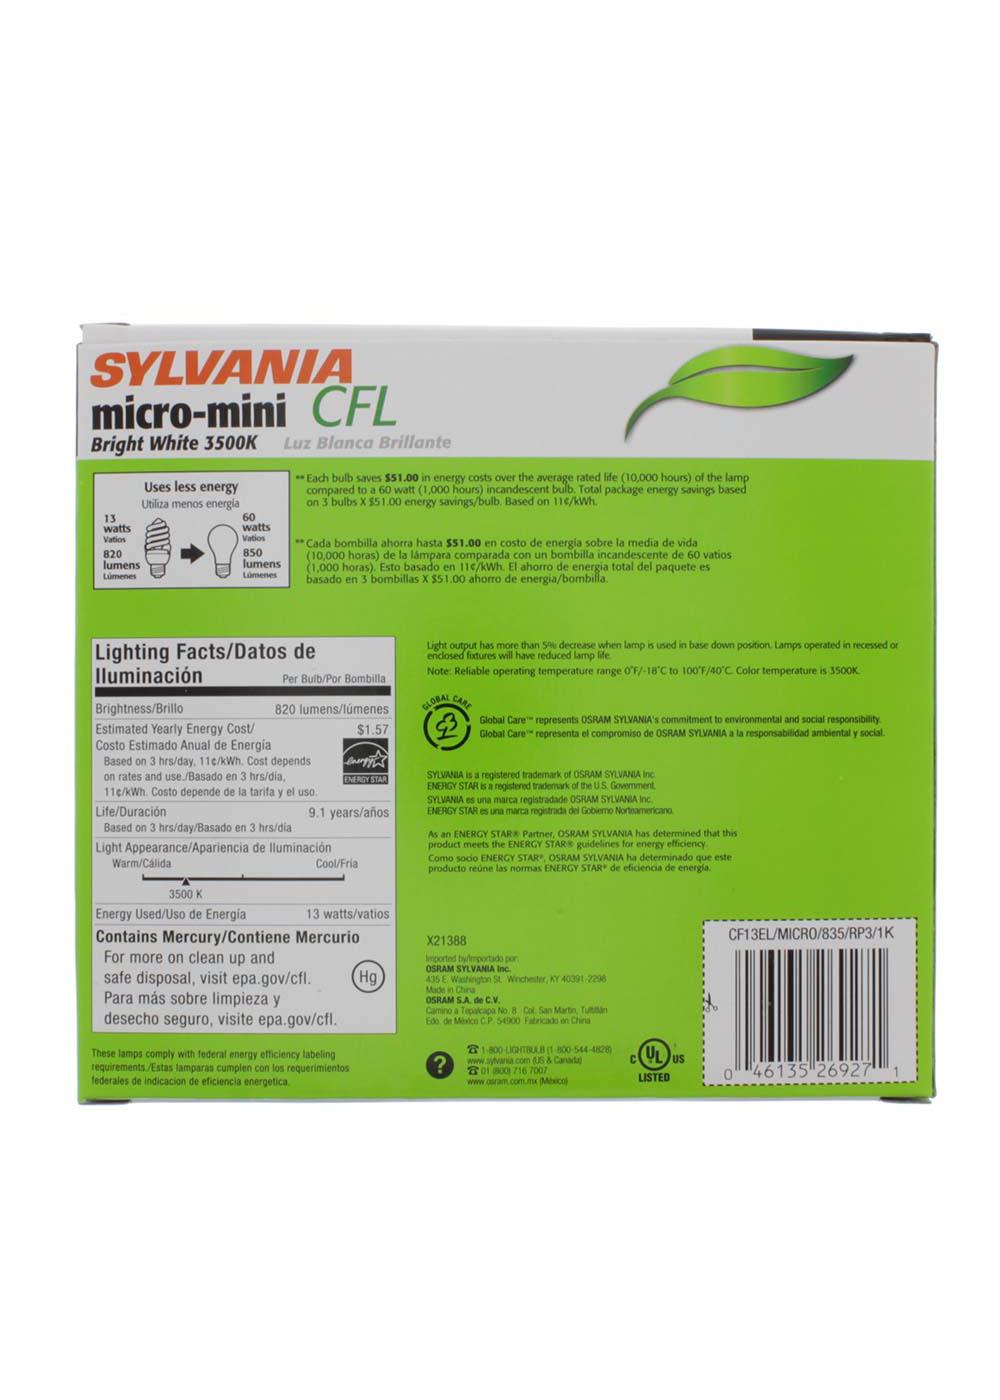 Sylvania Micro-Mini 60-Watt Bright White CFL Light Bulbs; image 2 of 2